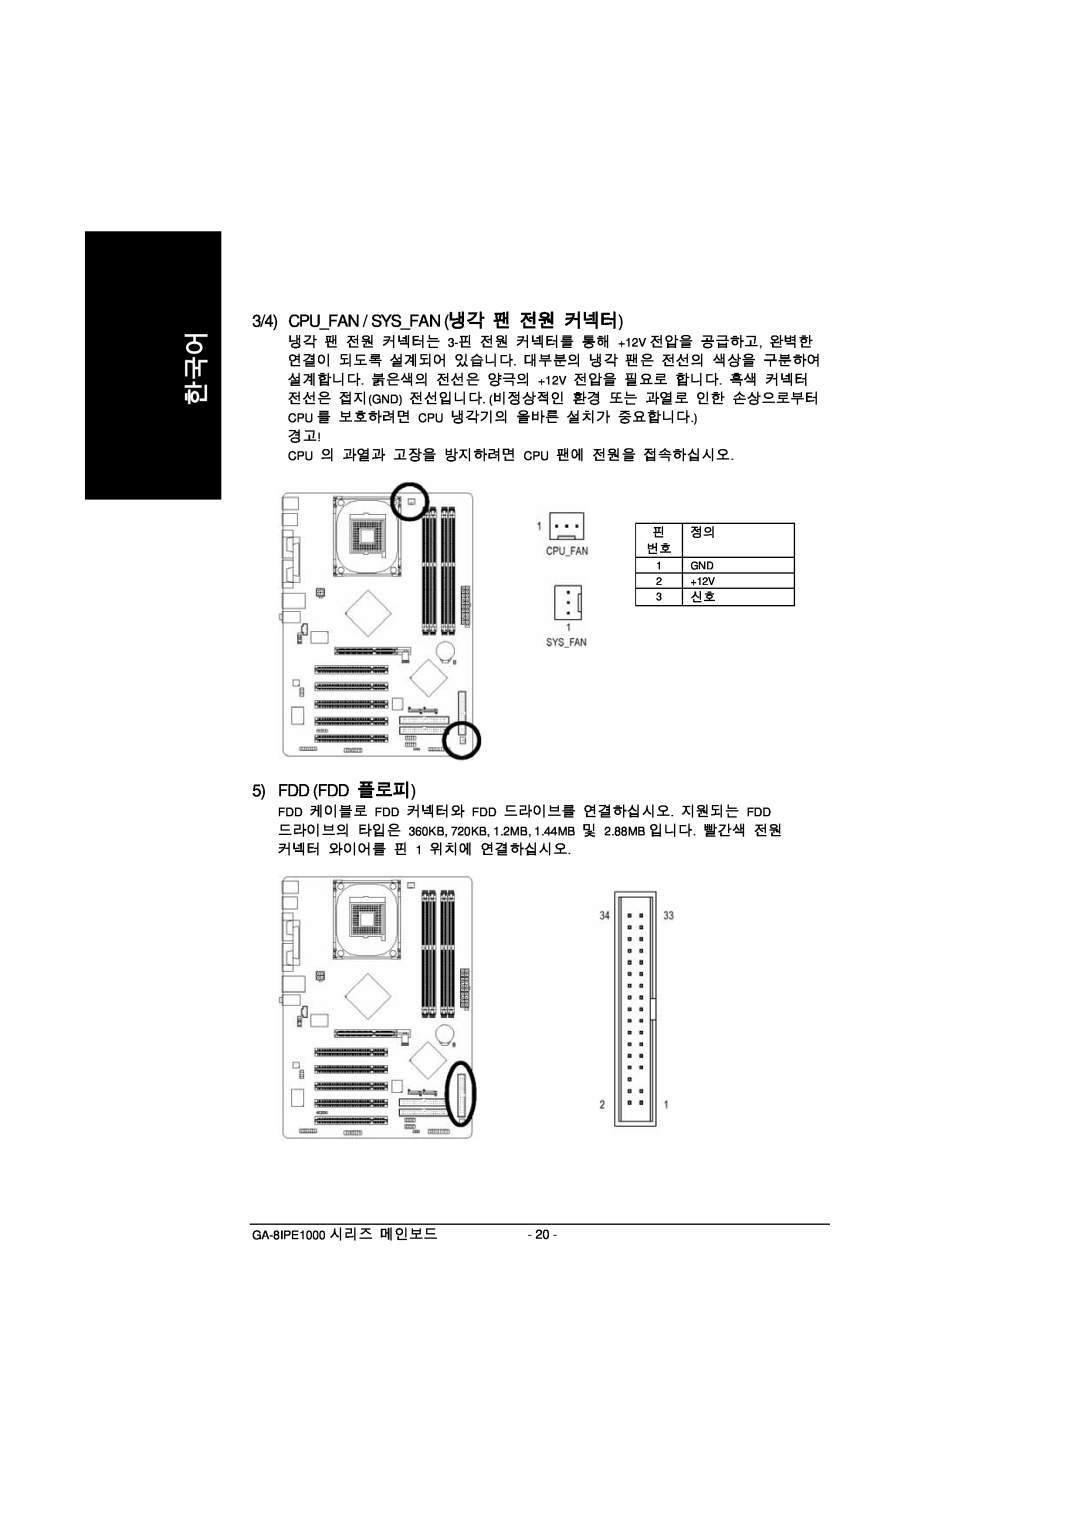 Intel GA-8IPE1000 manual 3/4 CPUFAN / SYSFAN 냉각 팬 전원 커넥터, Fdd Fdd 플로피 